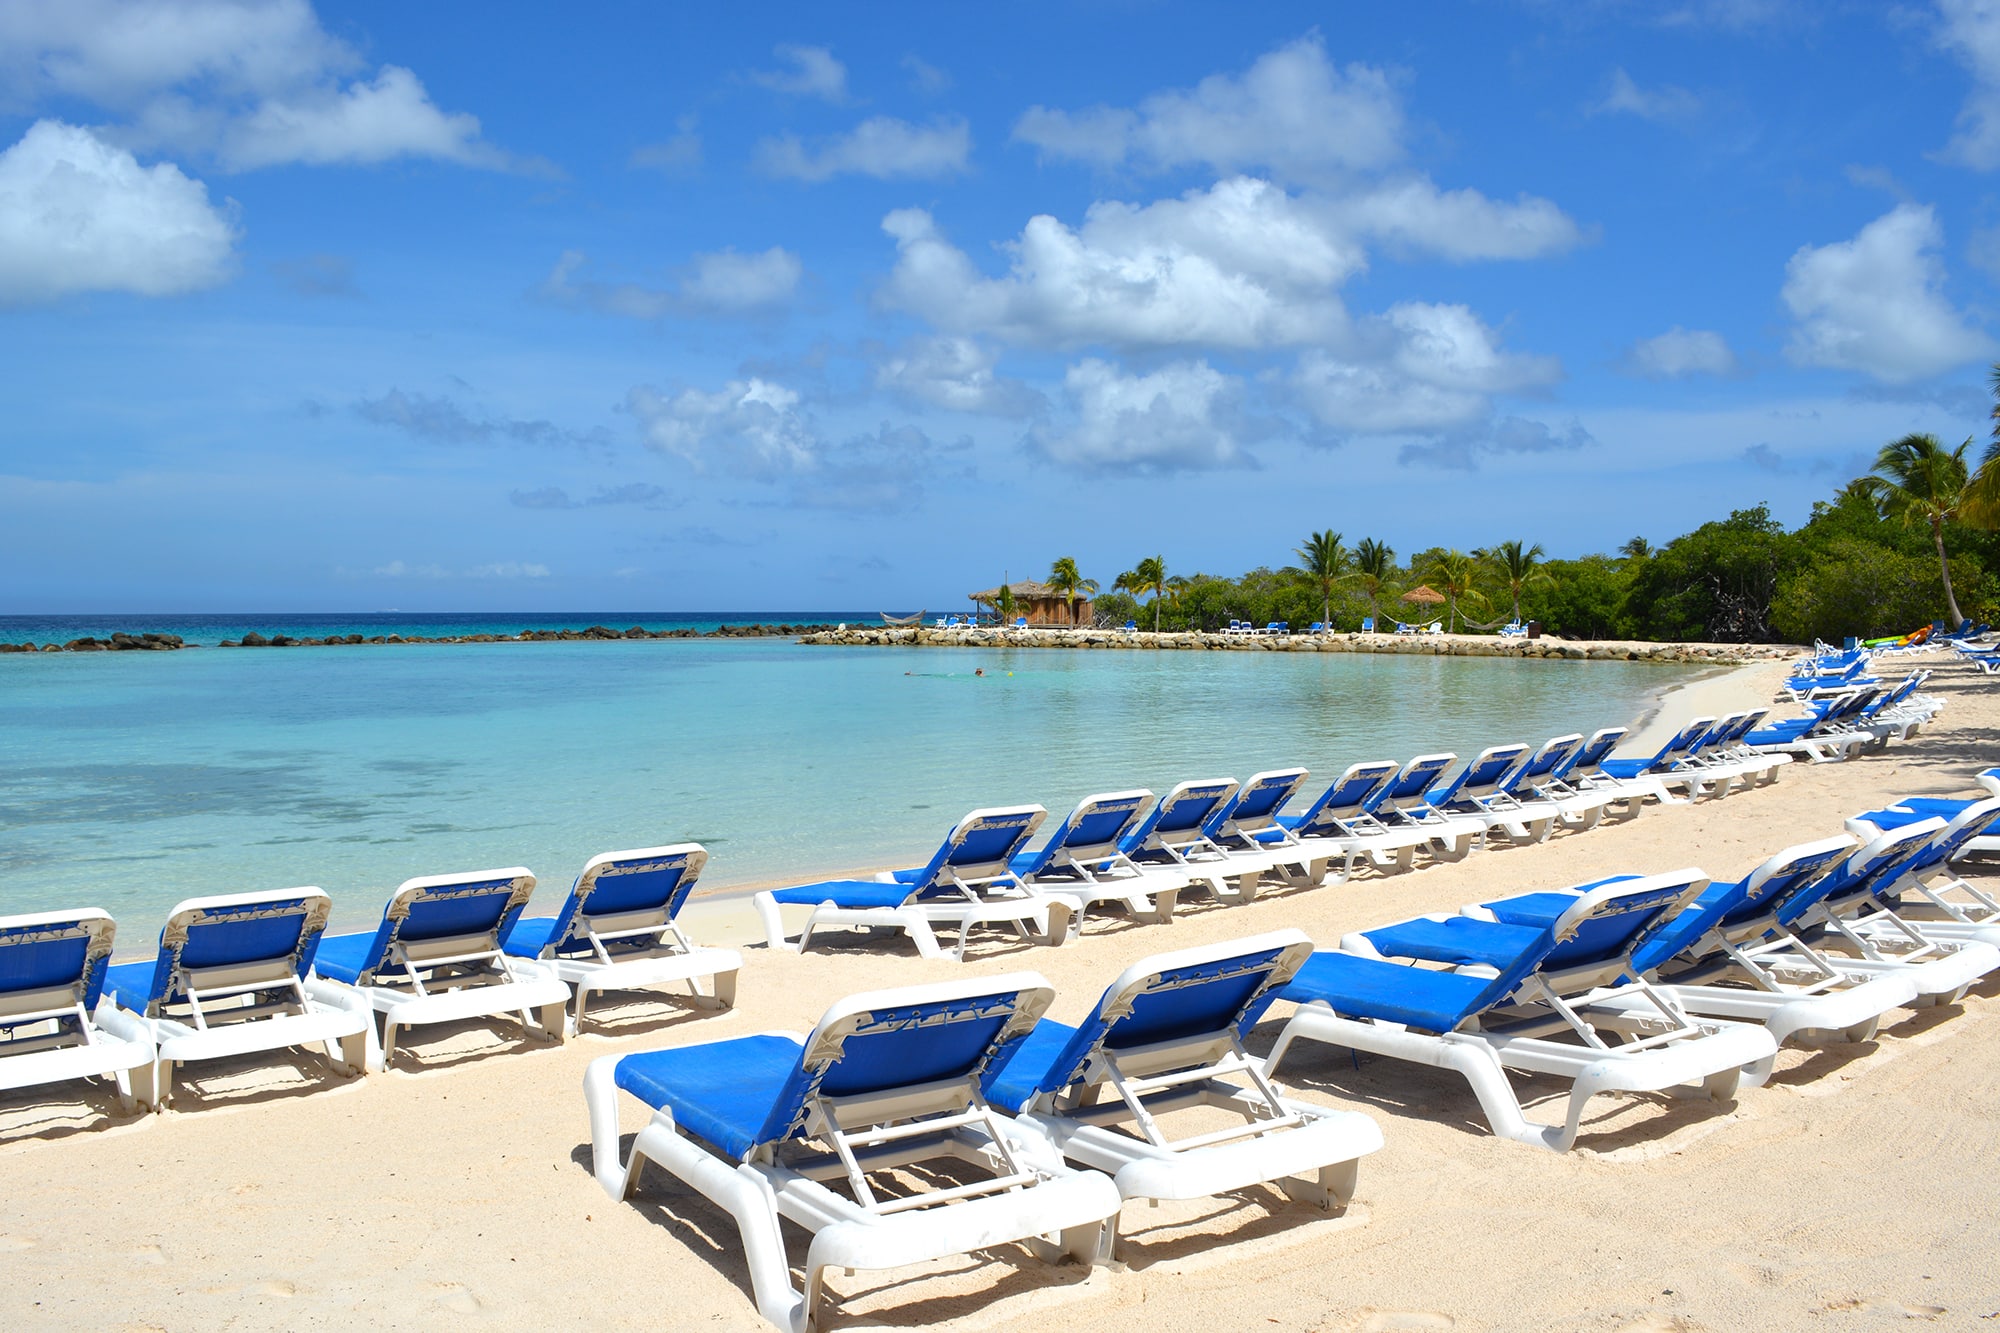 Black Friday Cyber Monday Travel Deals: Renaissance Aruba Resort & Casino